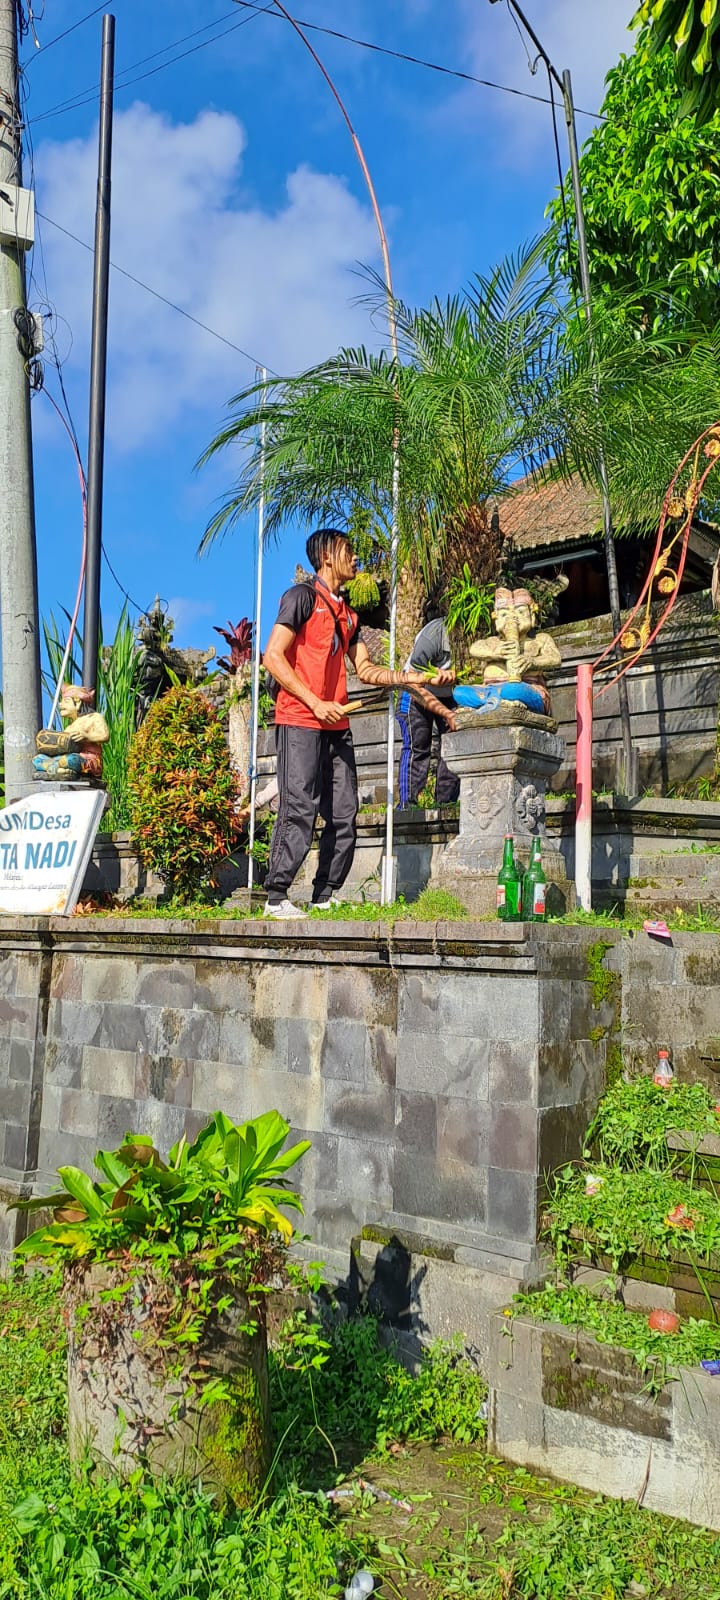 Jumat Bersih di lingkungan Kantor Desa 